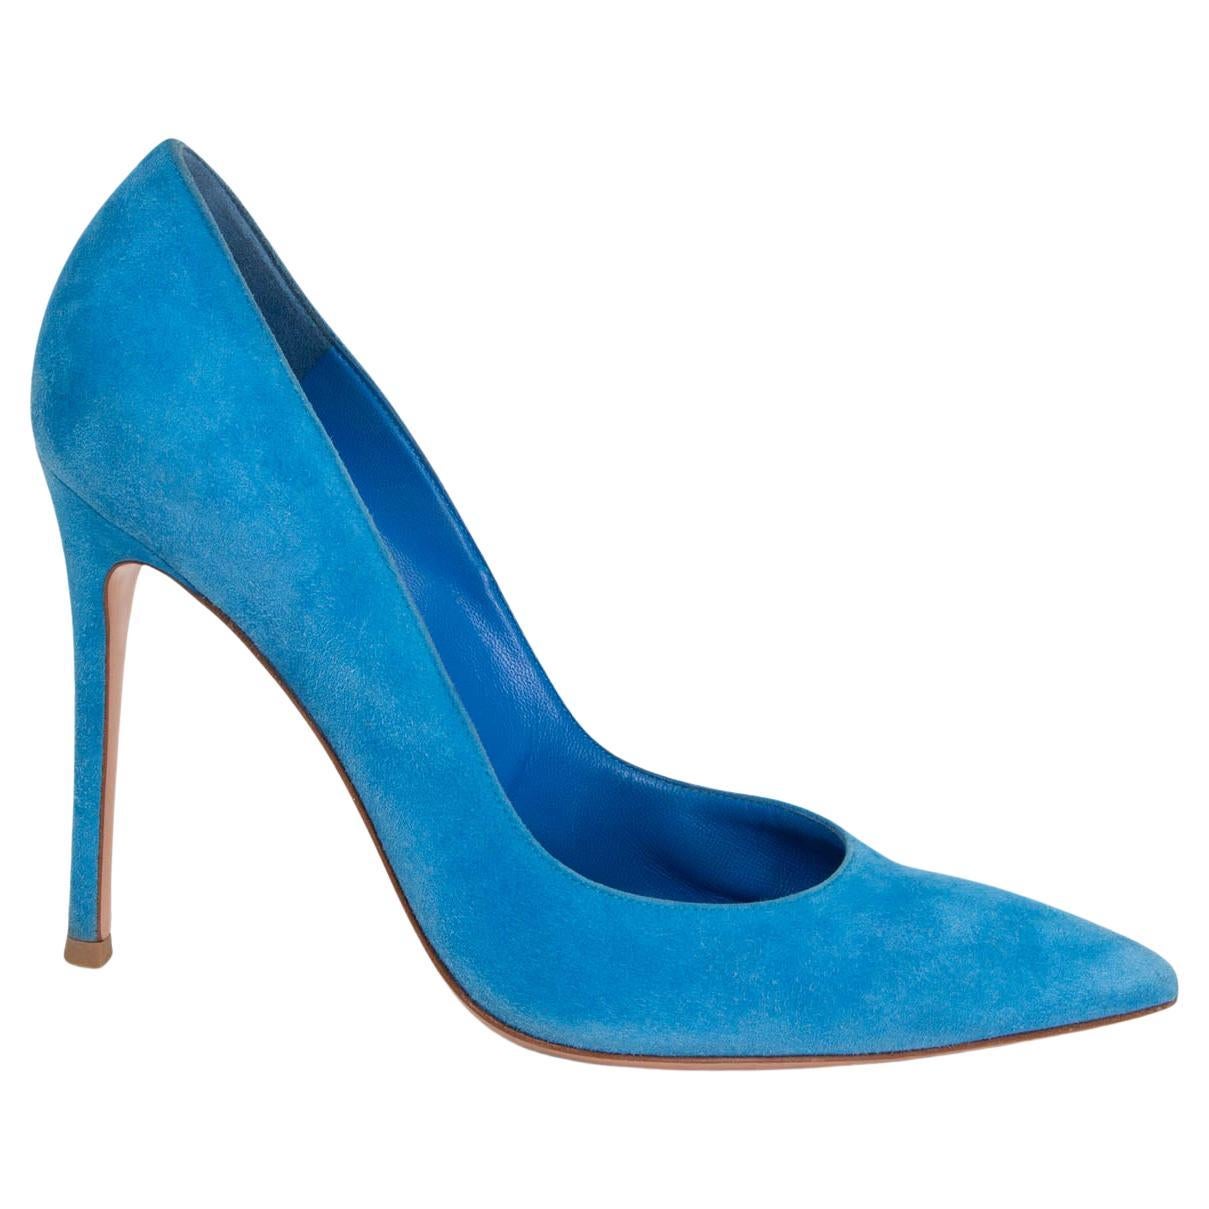 Chaussures à talons GIANTVITO ROSSI 105 en daim bleu azur GIANVITO, taille 38 en vente